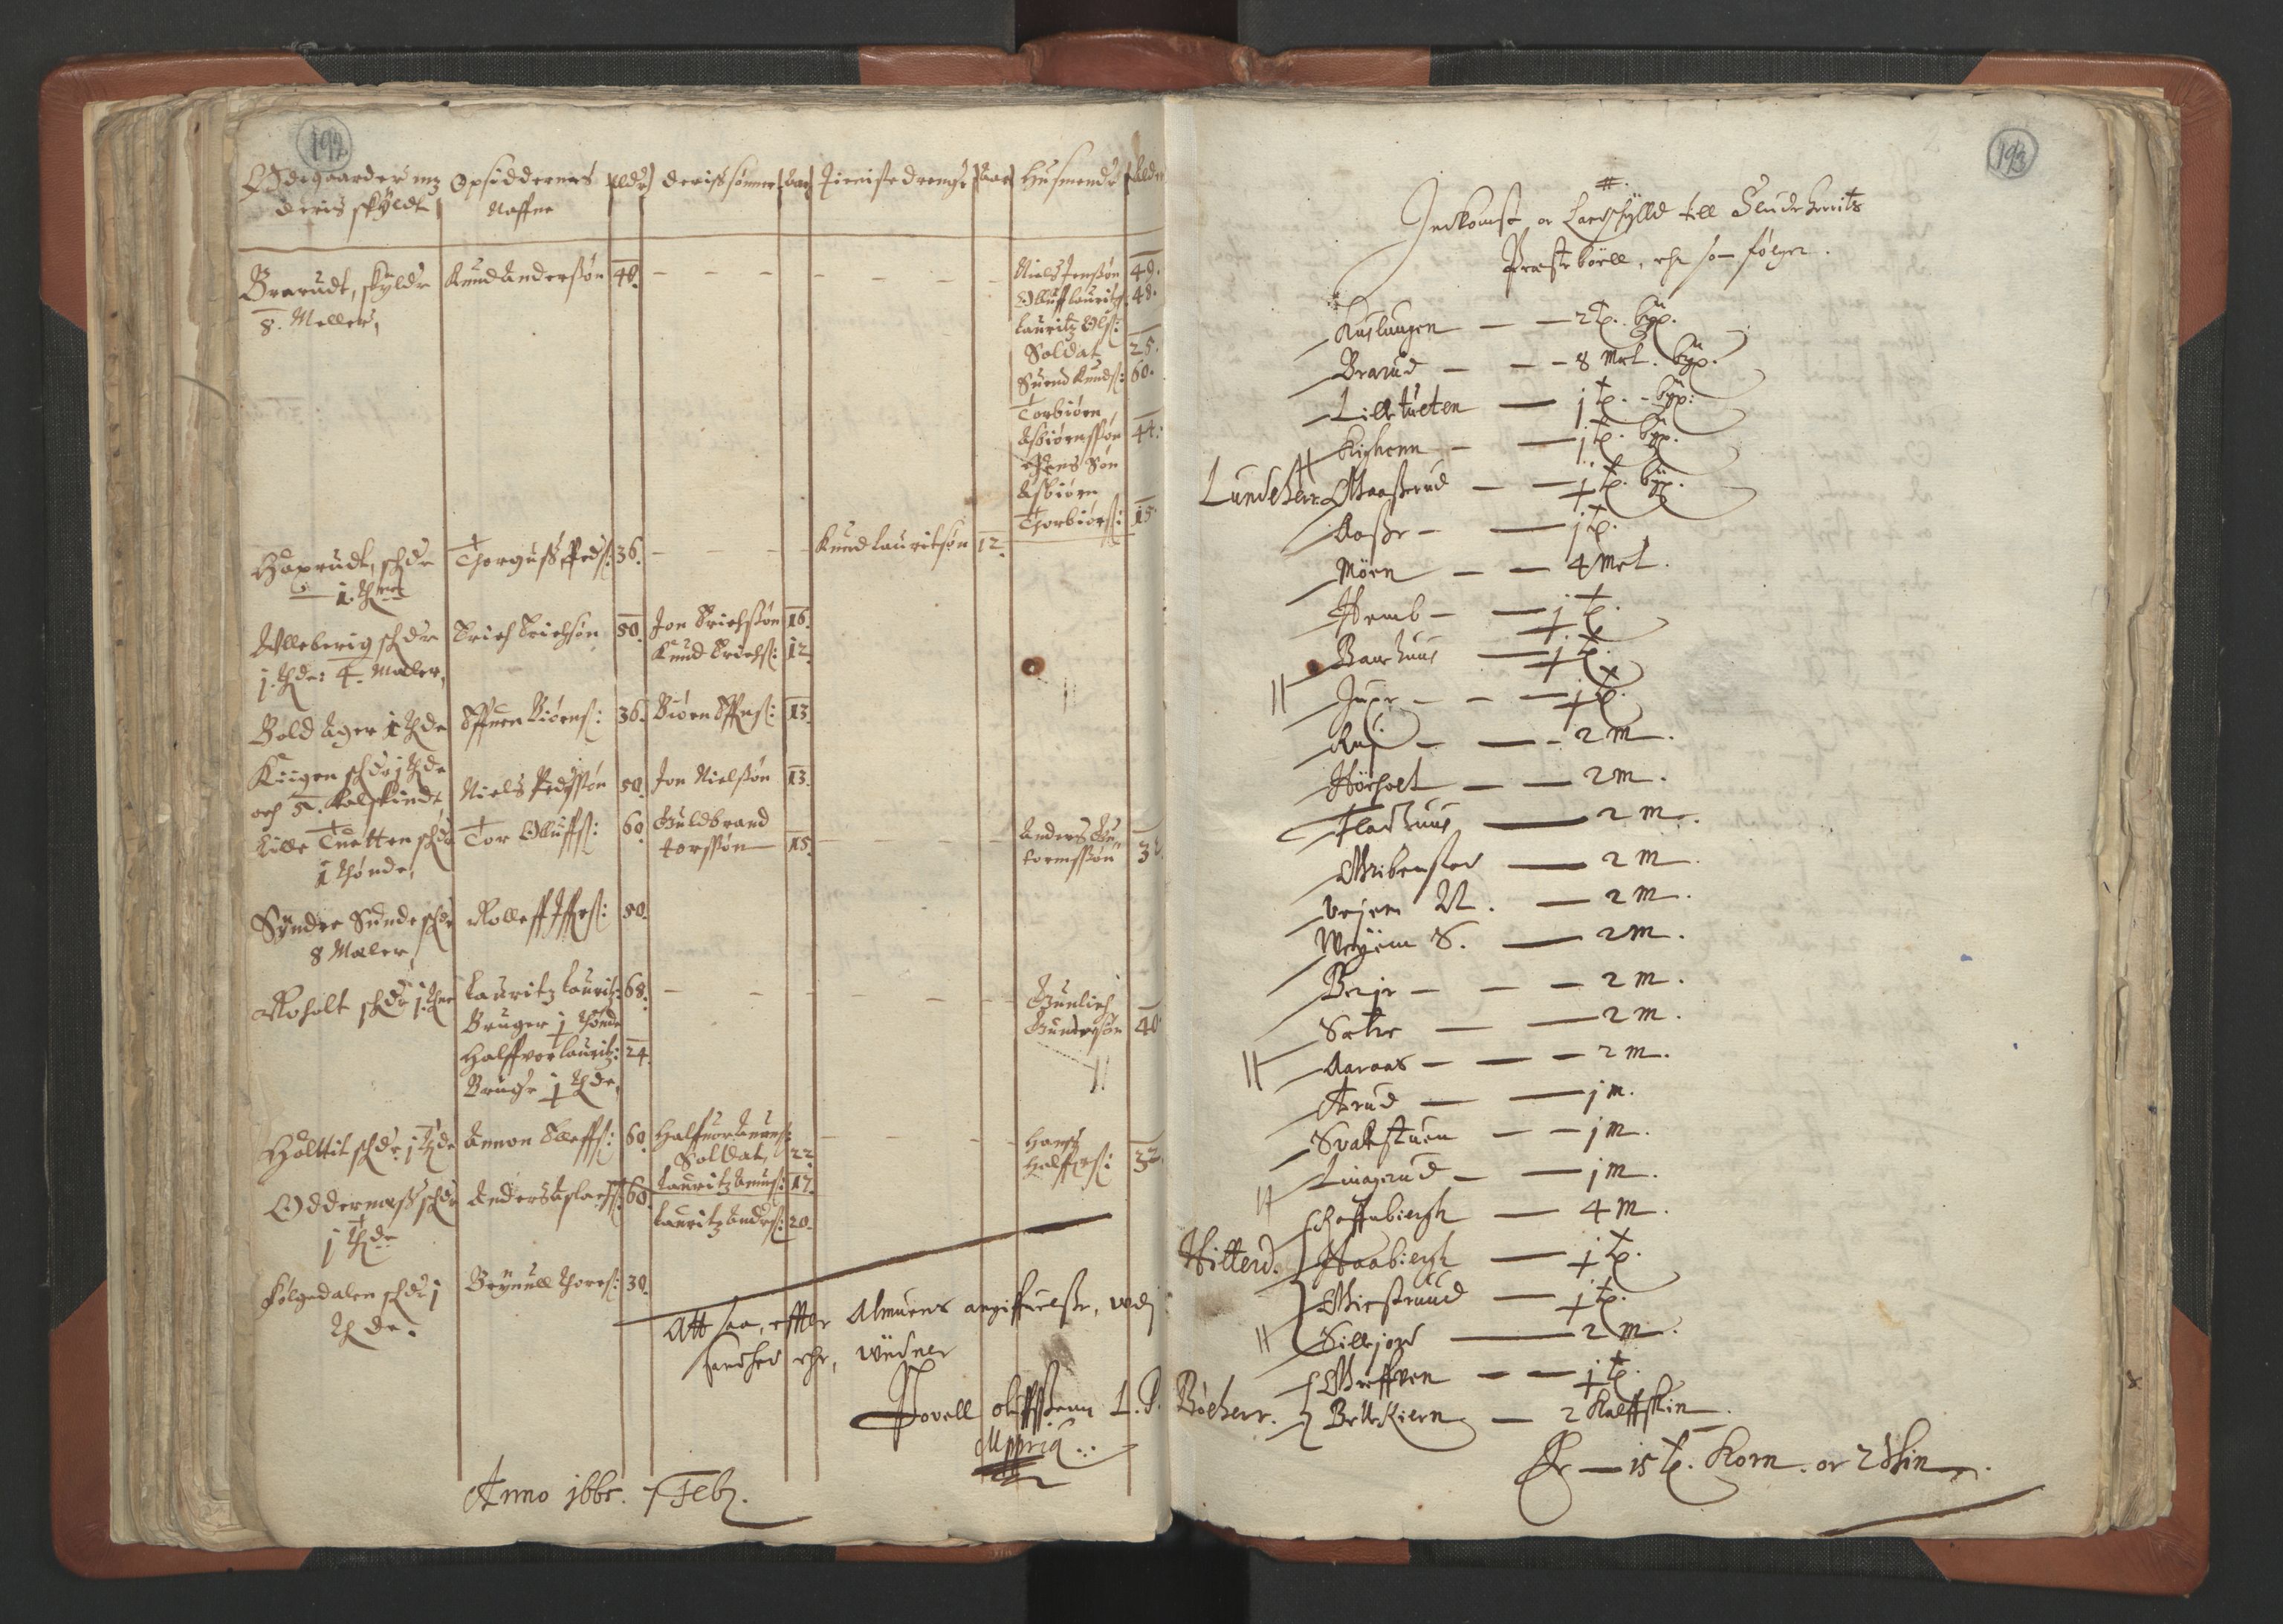 RA, Vicar's Census 1664-1666, no. 12: Øvre Telemark deanery, Nedre Telemark deanery and Bamble deanery, 1664-1666, p. 192-193